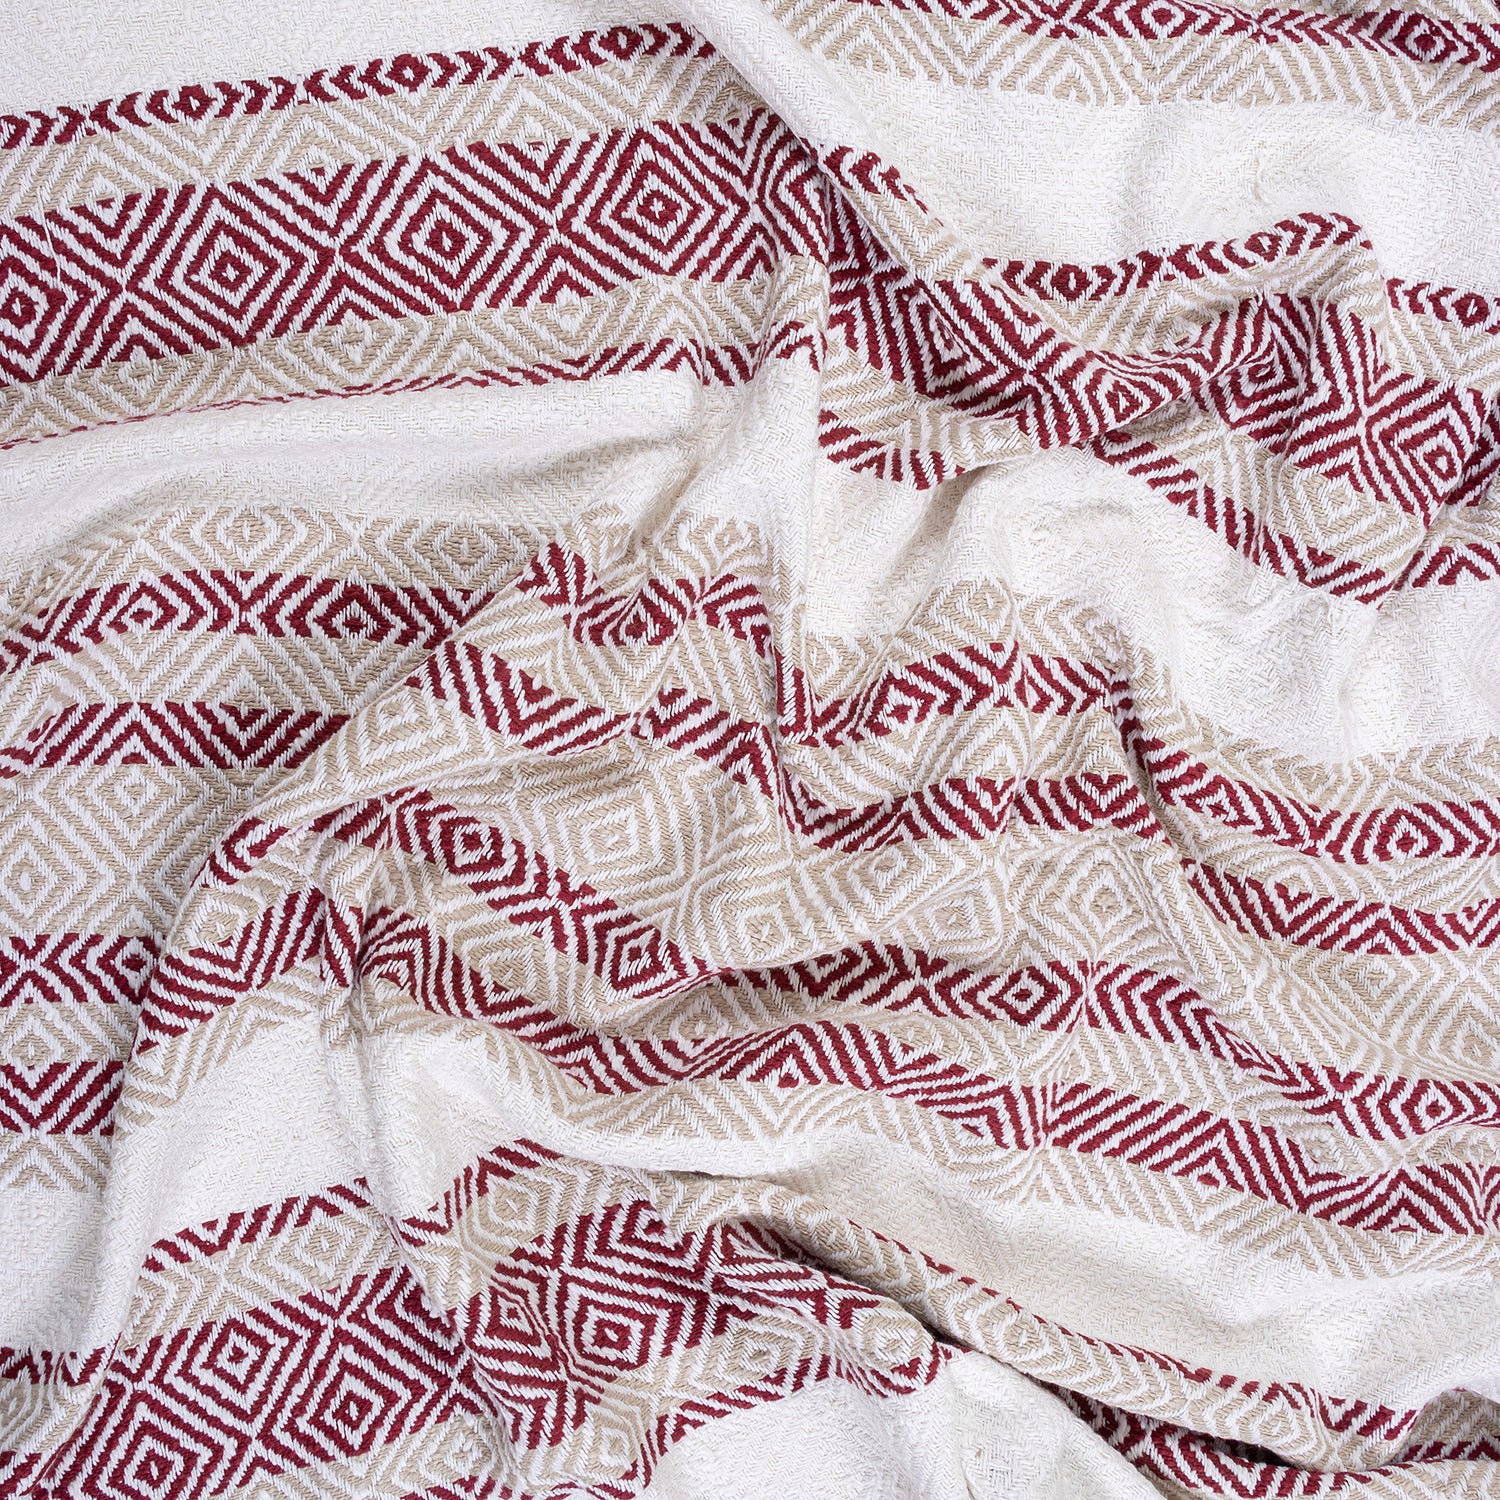 Handmade Soft Cotton Throw Blankets Home Decorative